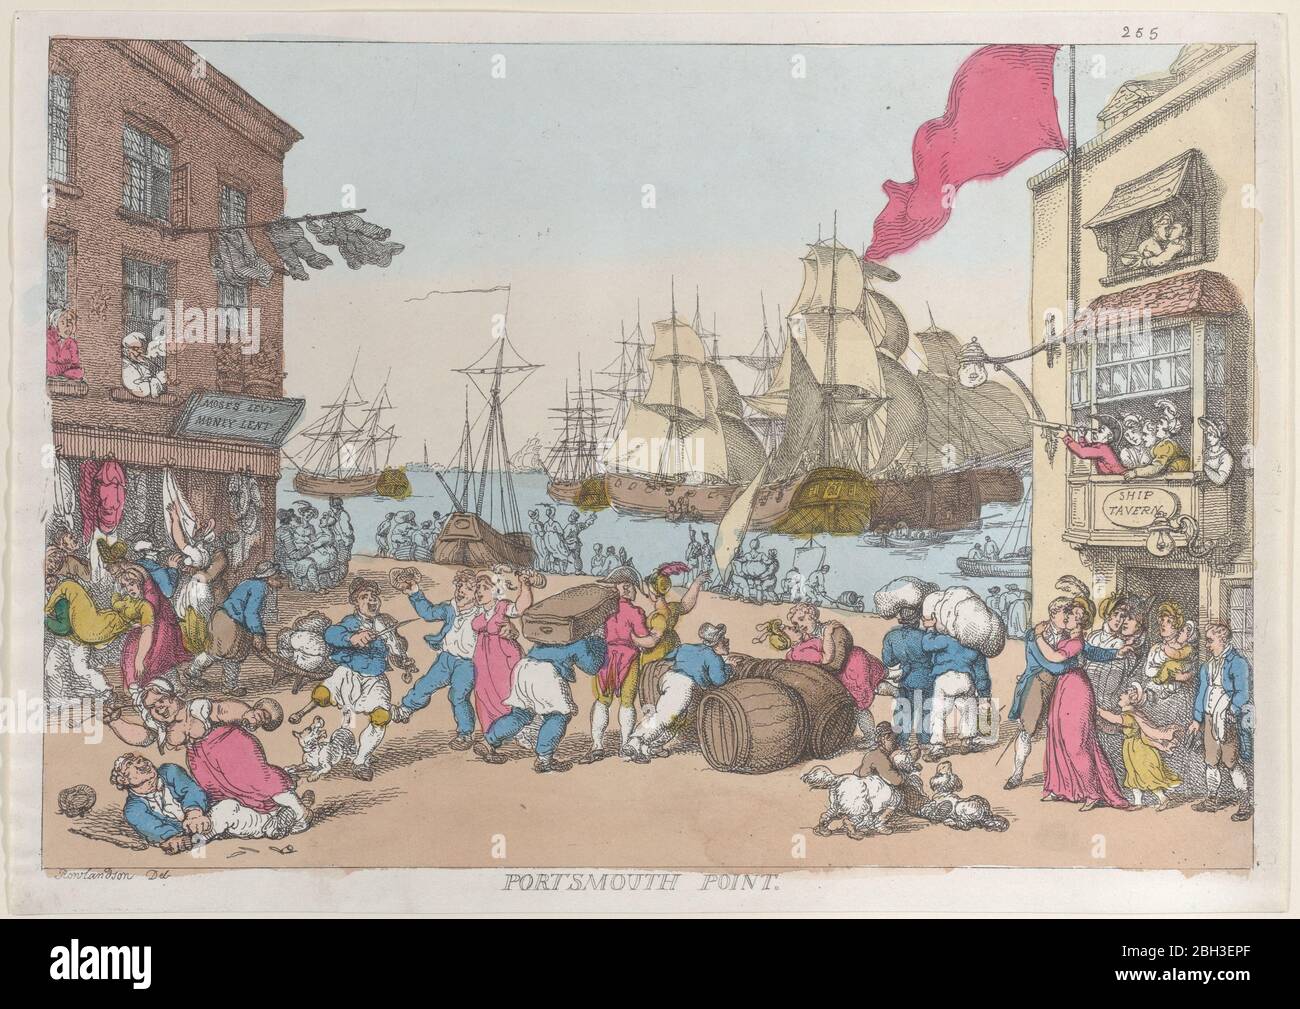 Portsmouth Point, 1814. Stock Photo